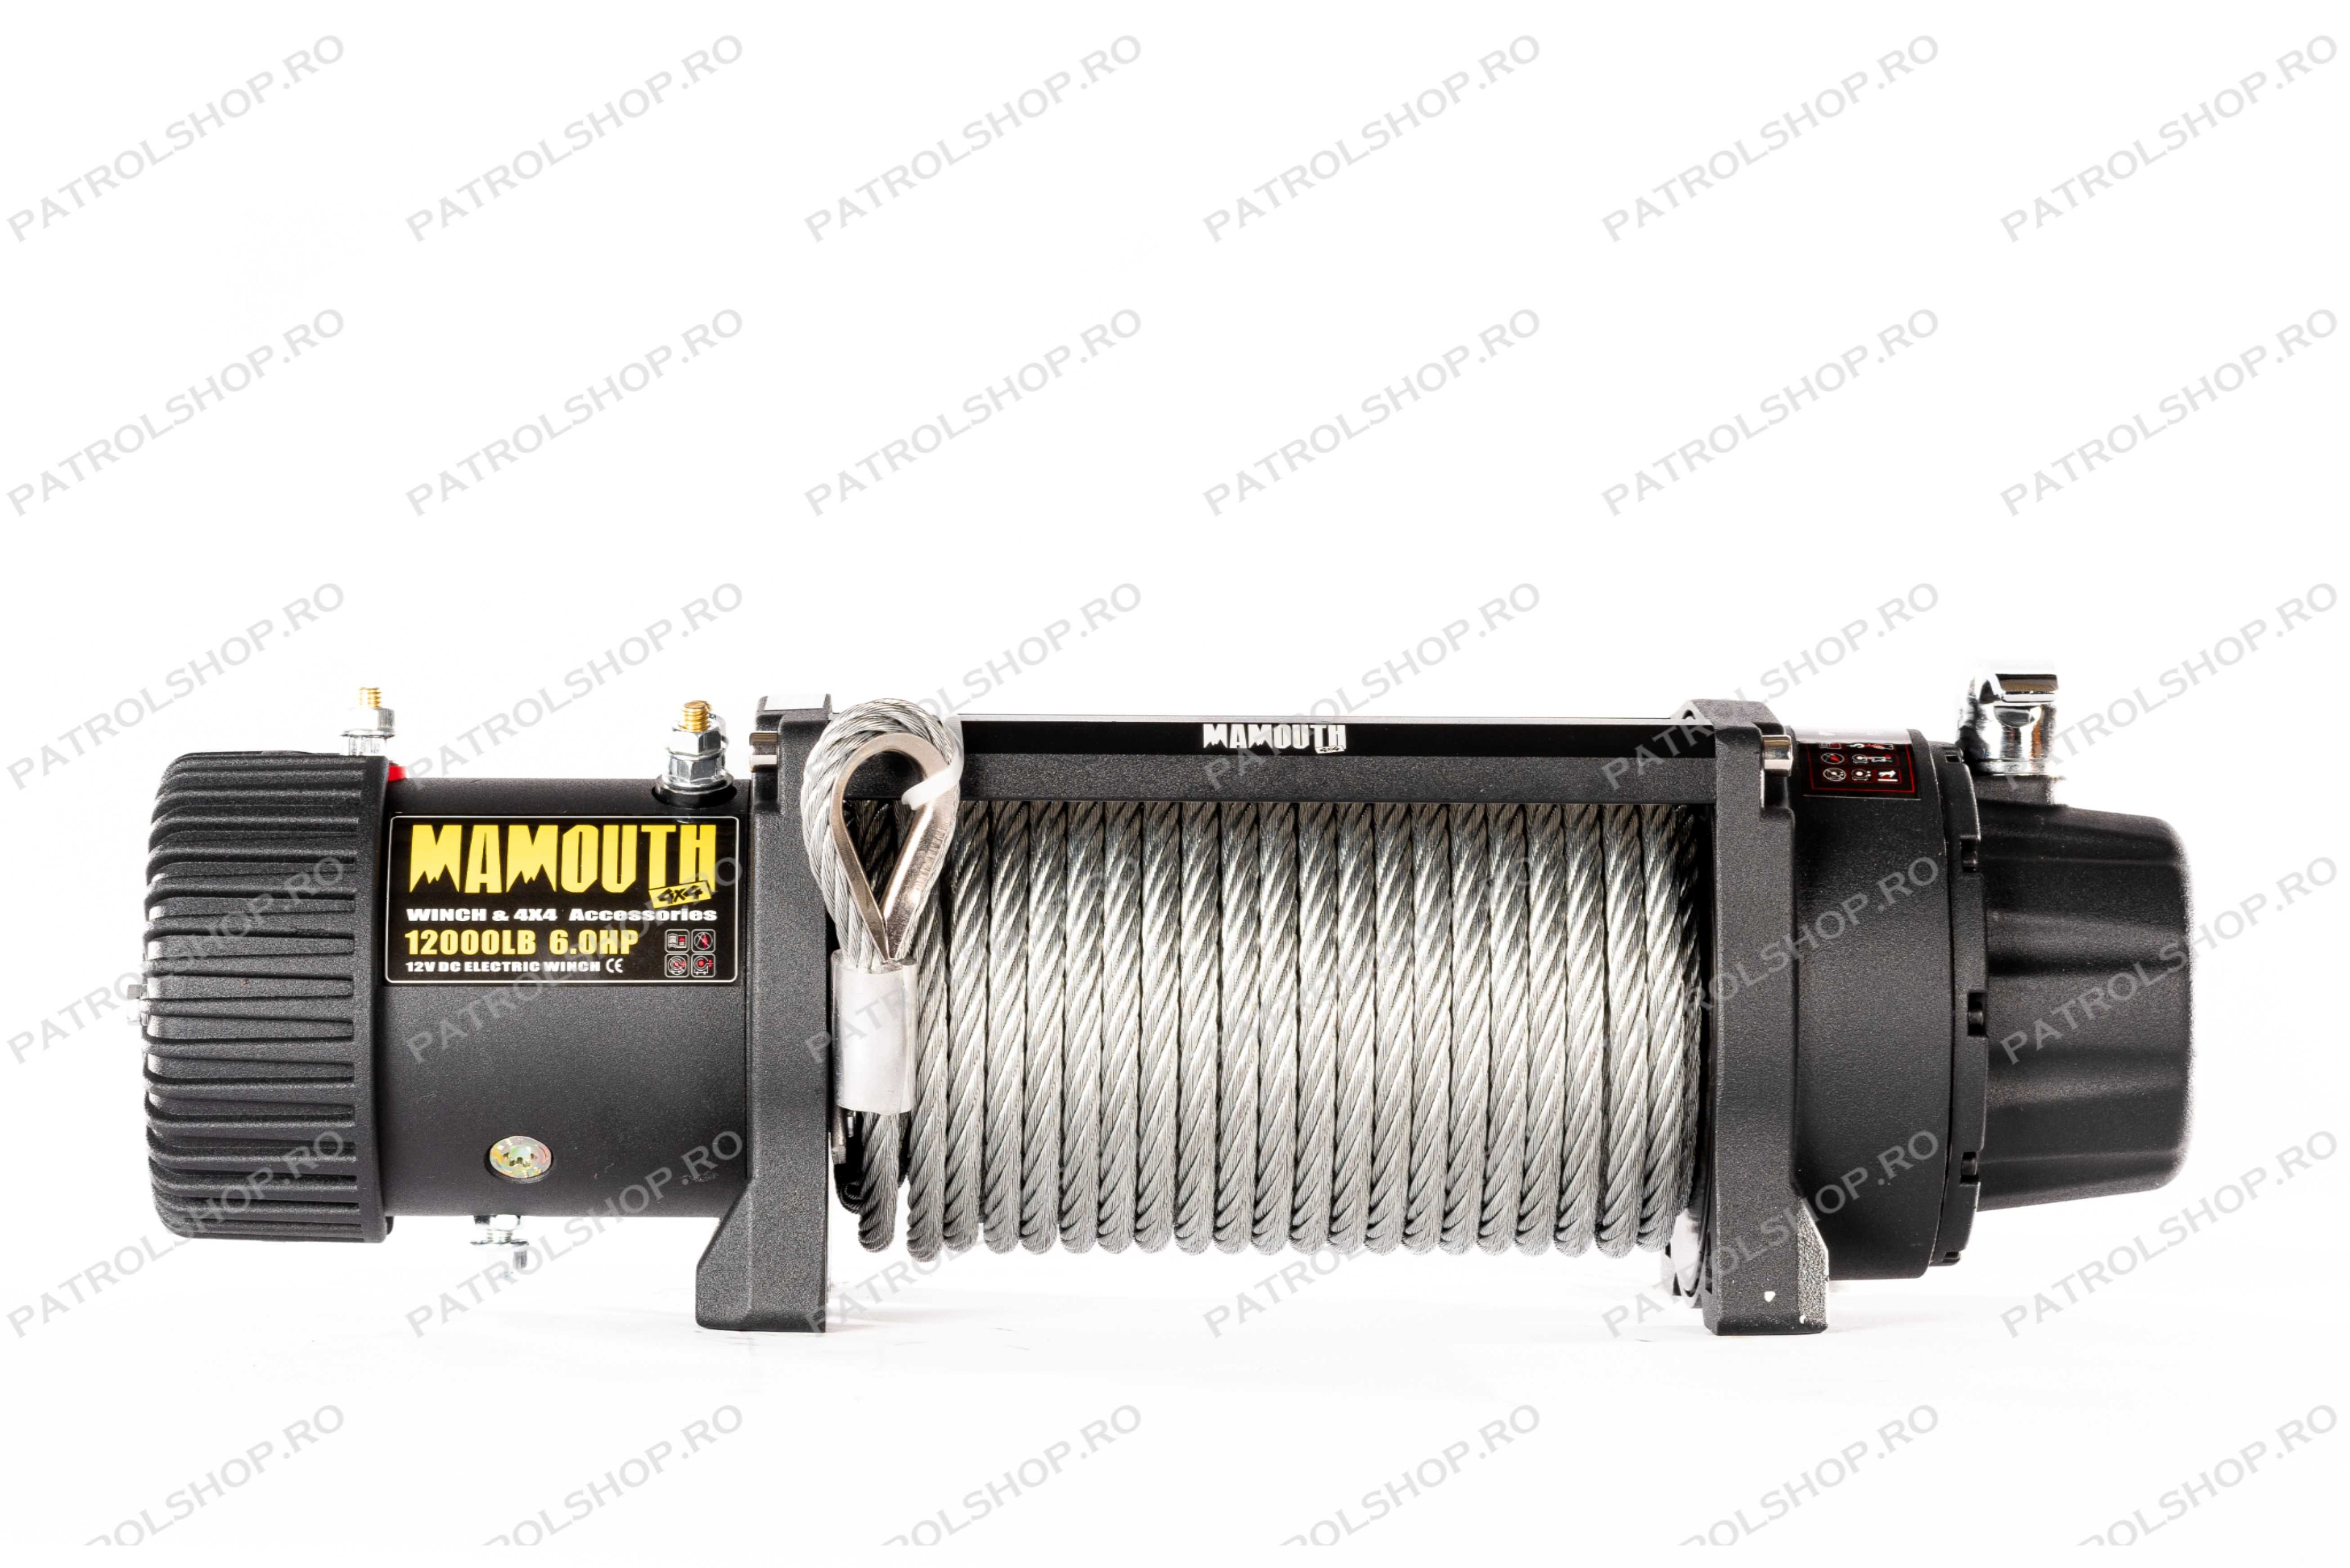 Troliu auto electric Mamouth 12000 lbs - 5443 kg - cablu otel